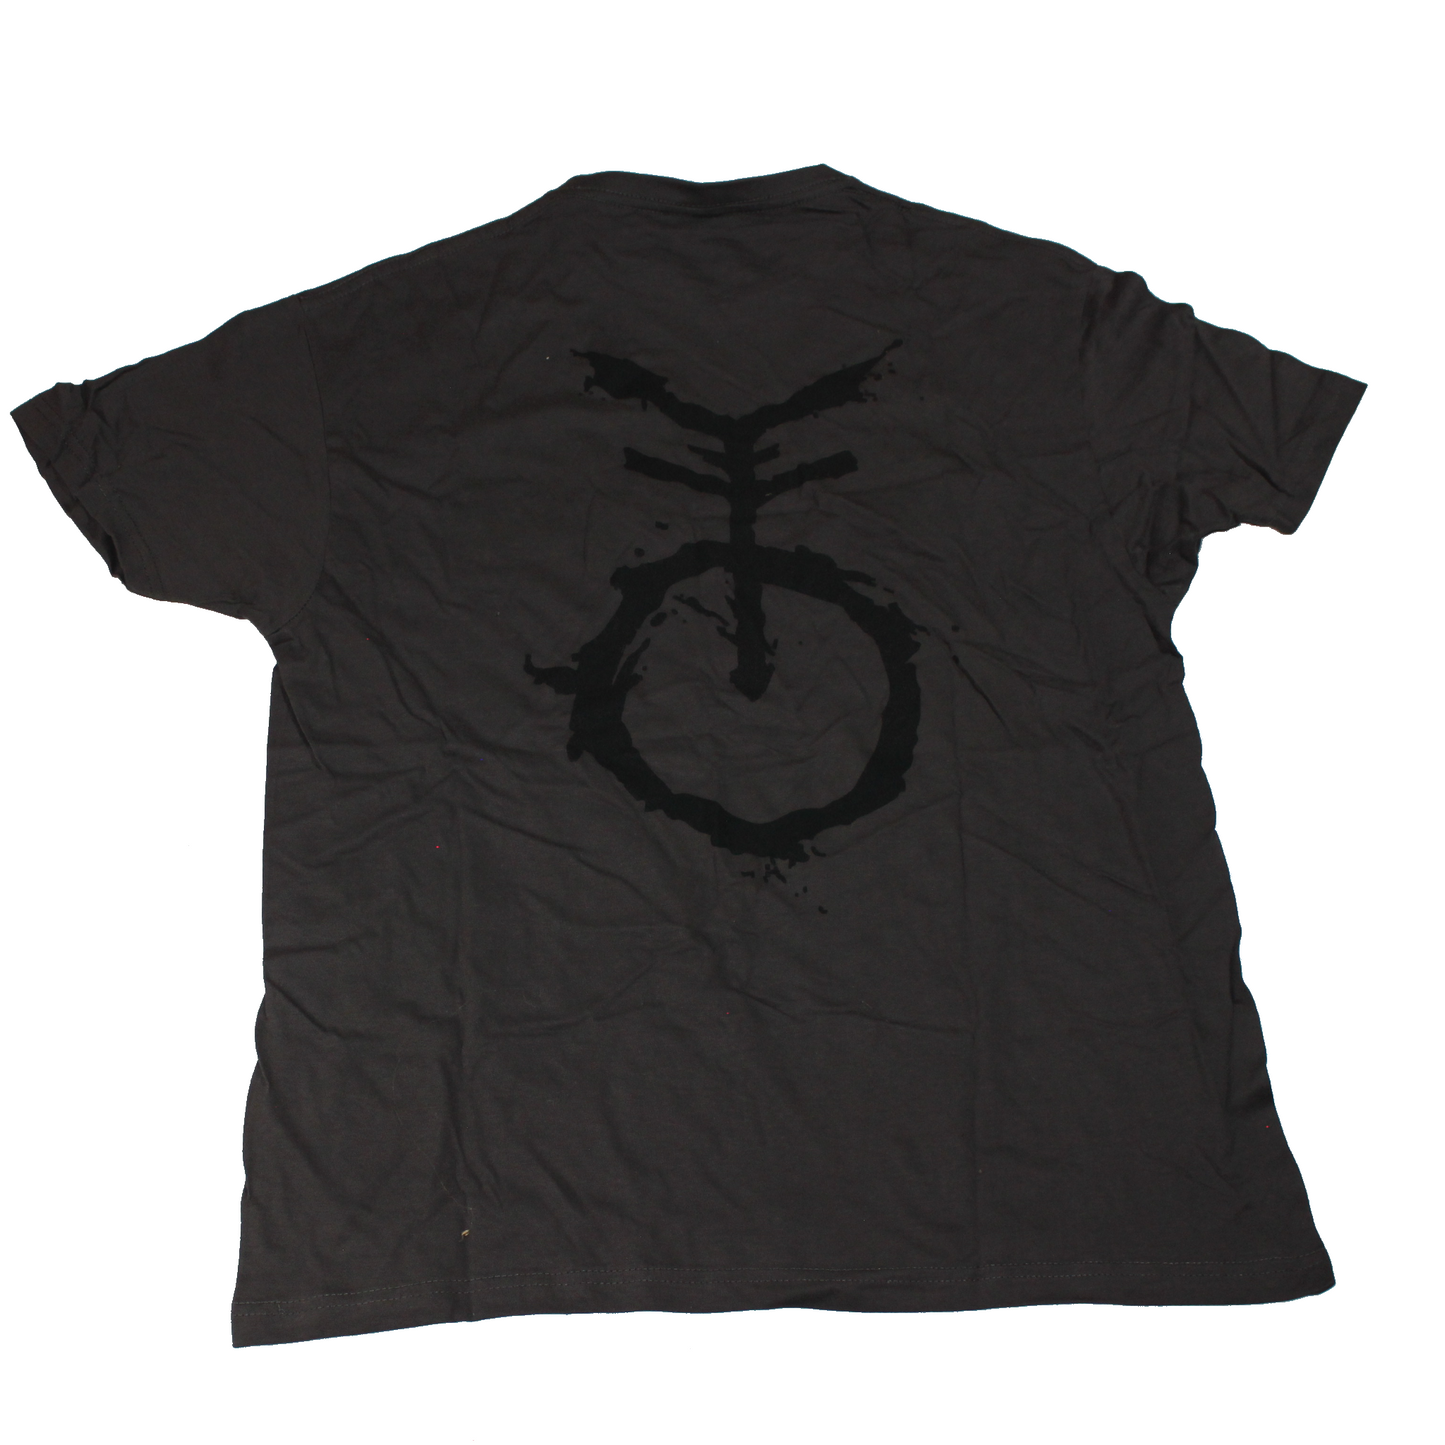 ORAL FISTFUCK - Black Logo on grey Shirt - T-Shirt